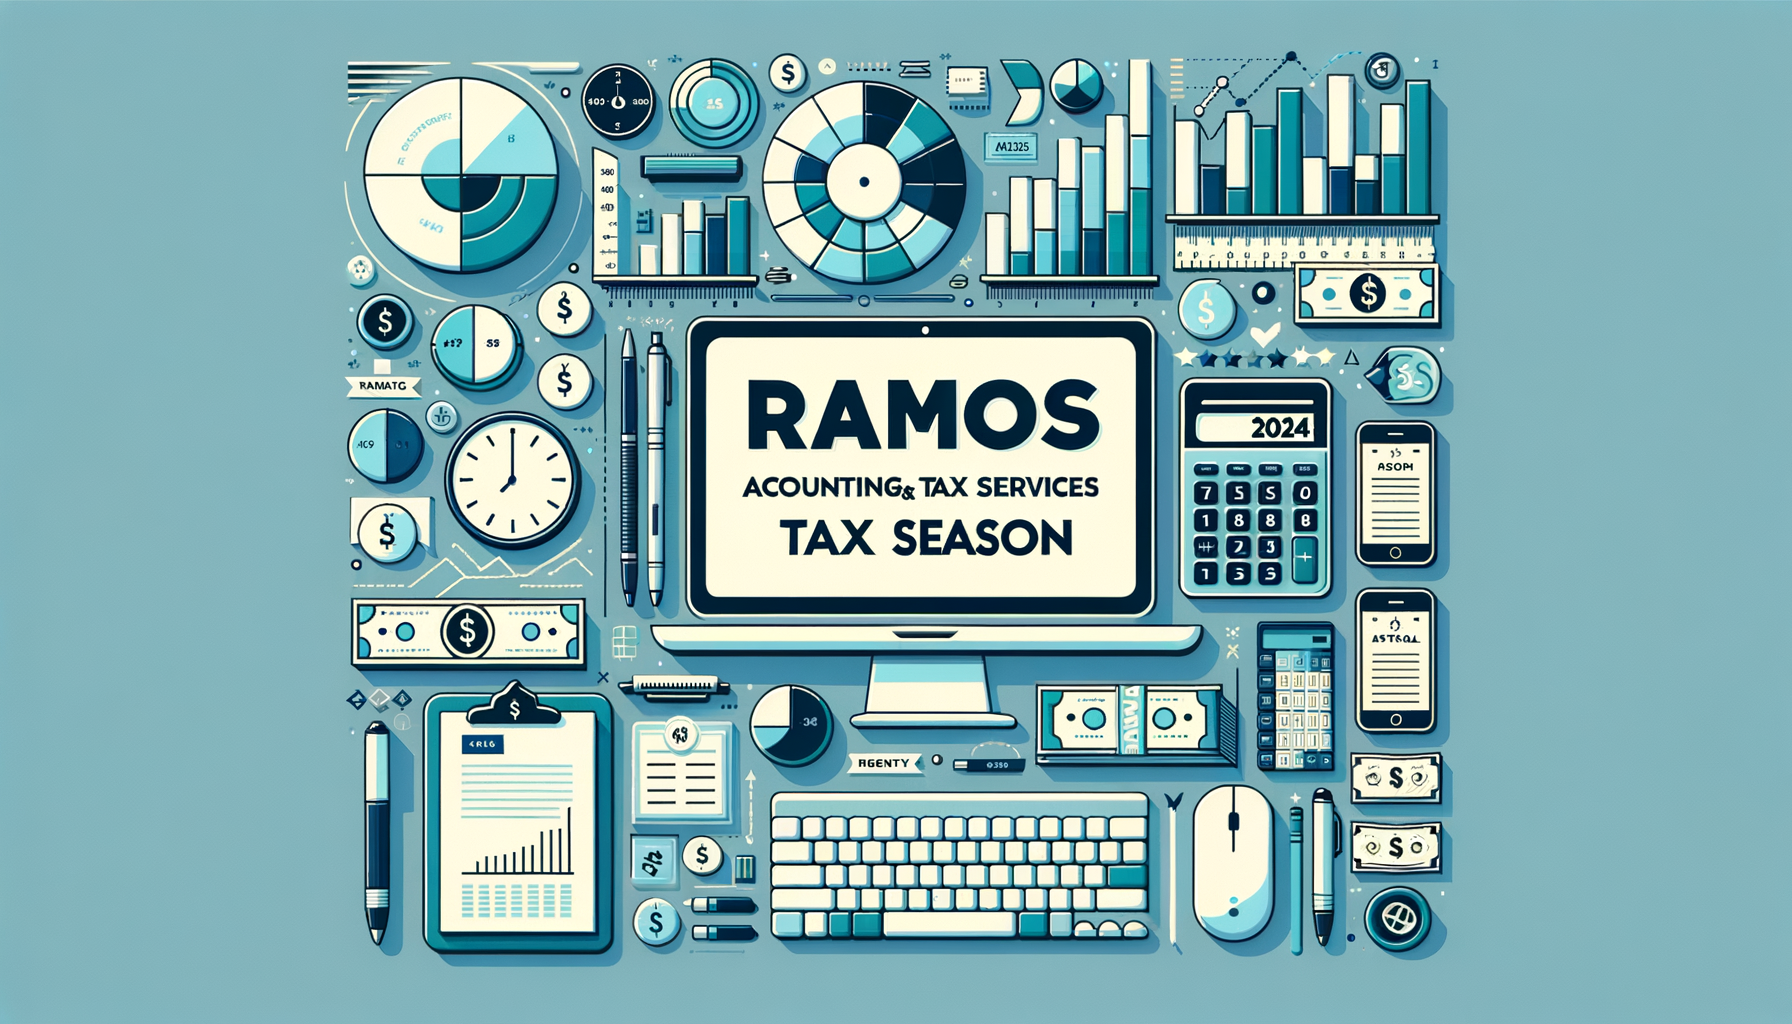 Ramos Accounting & Tax Services 2024 Tax Season